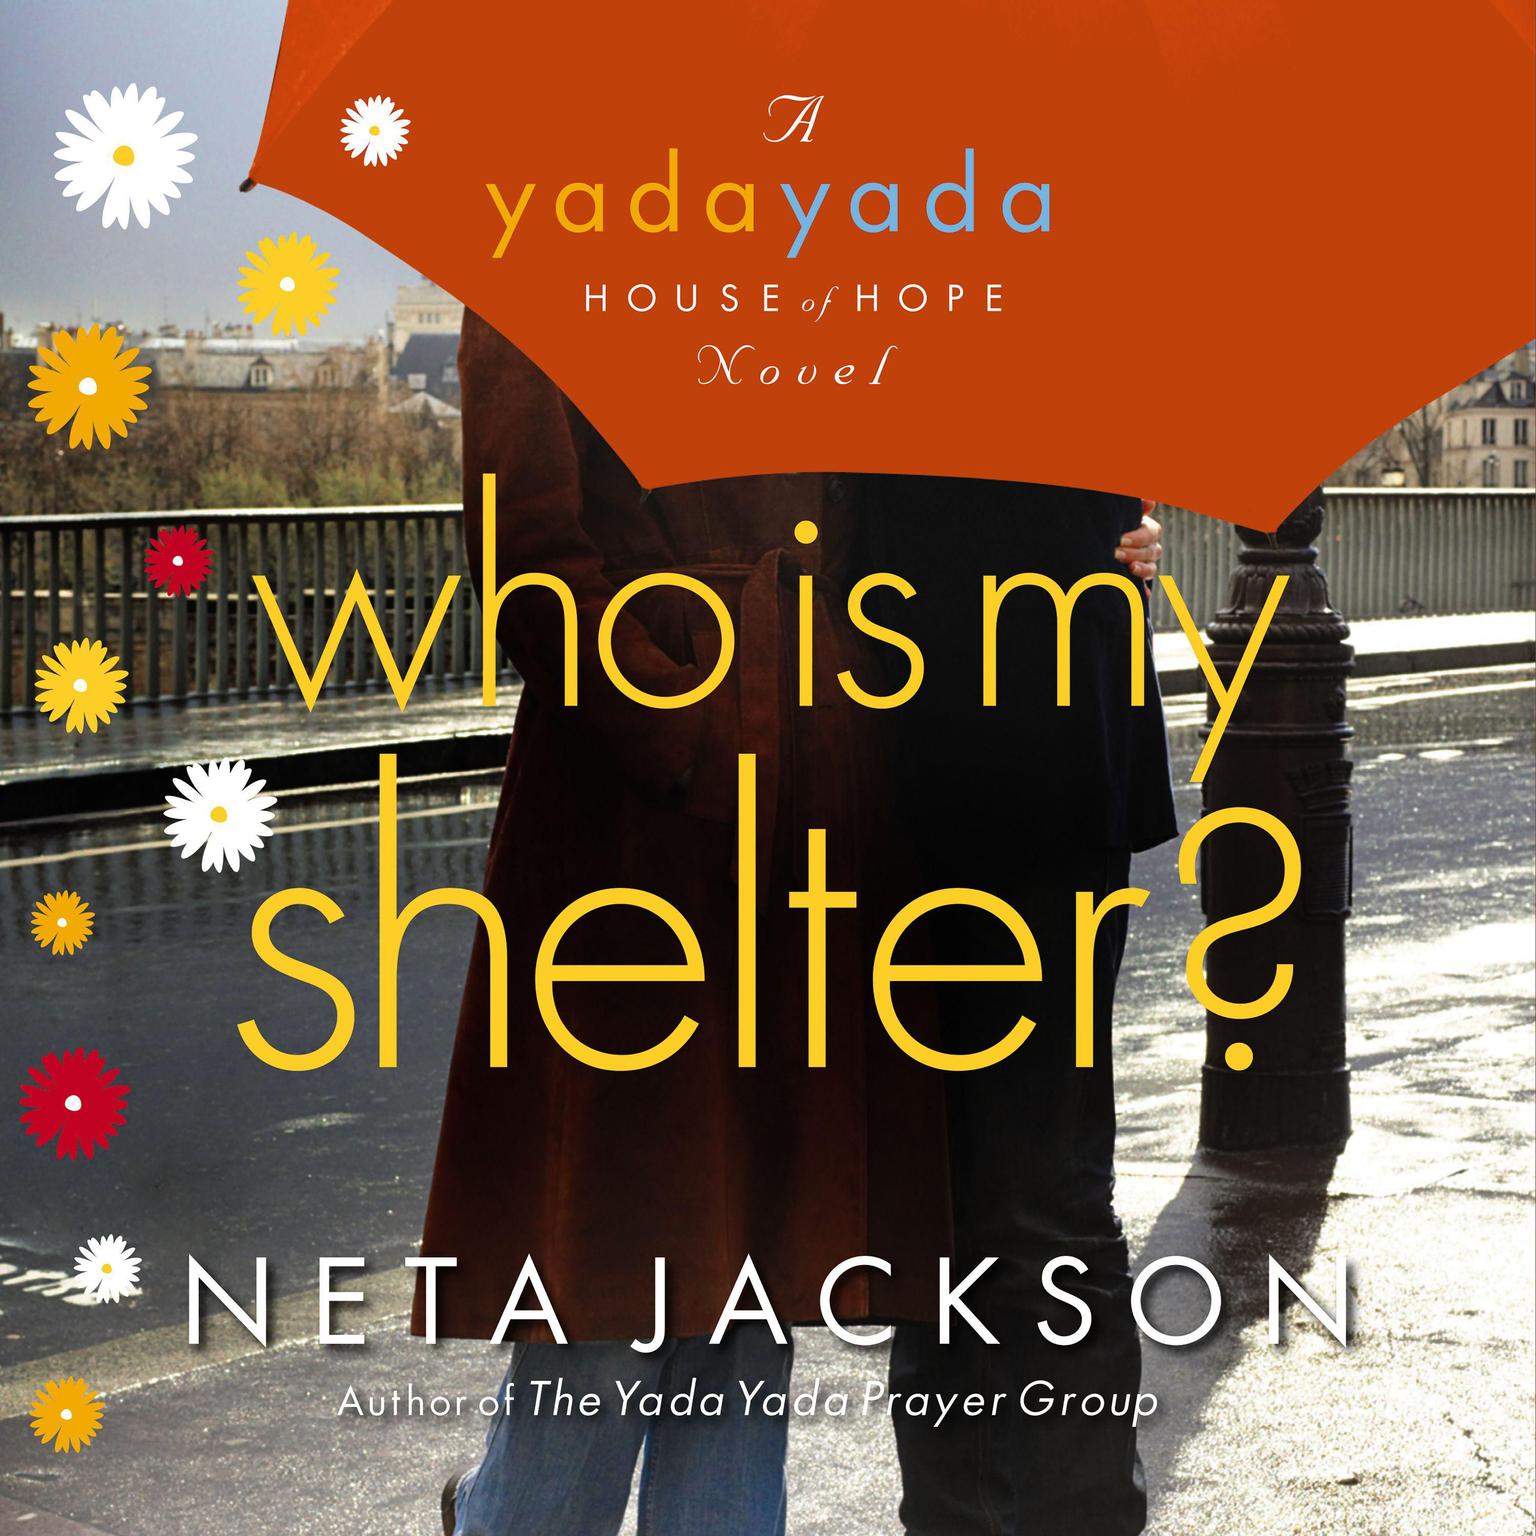 Who Is My Shelter?: A Yada Yada House of Hope Novel Audiobook, by Neta Jackson